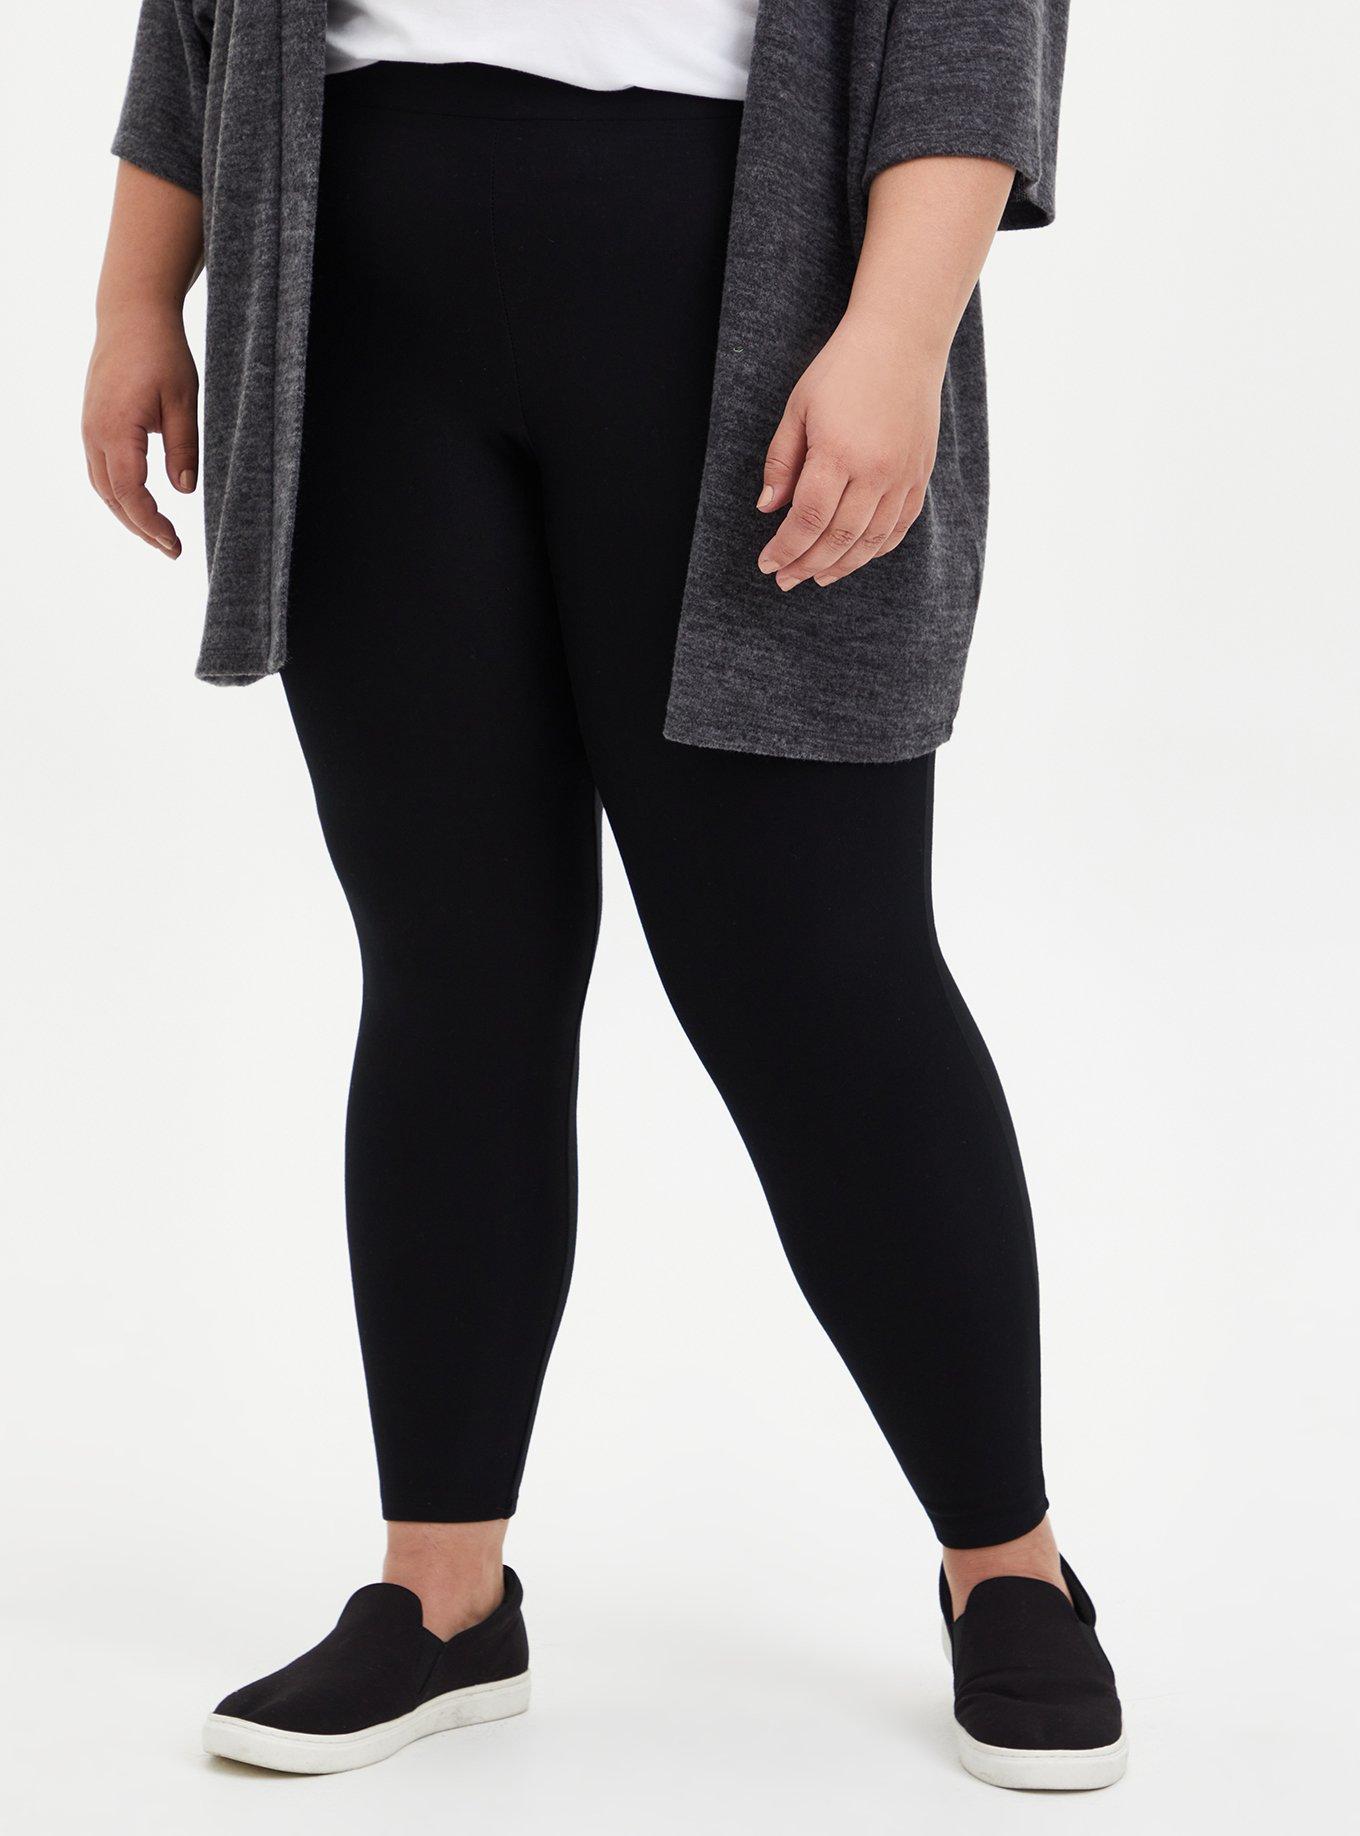 Buy DONSON Women Winter Warm Pantyhose Tights Elastic Fleece Lined